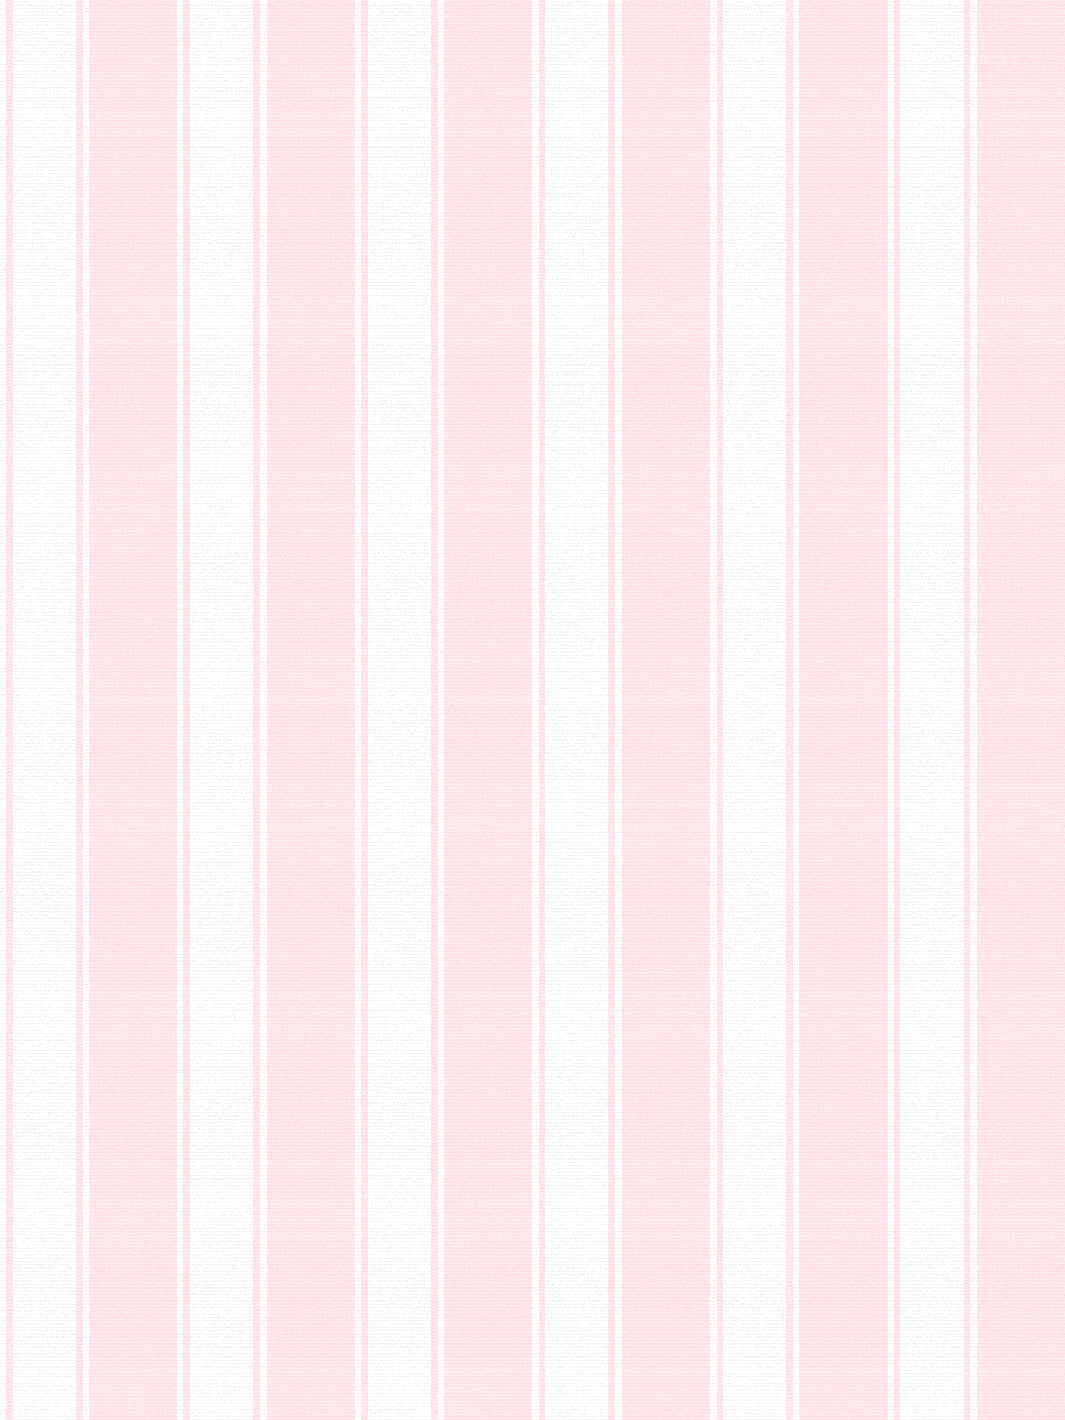 'Ojai Stripe' Wallpaper by Wallshoppe - Pink